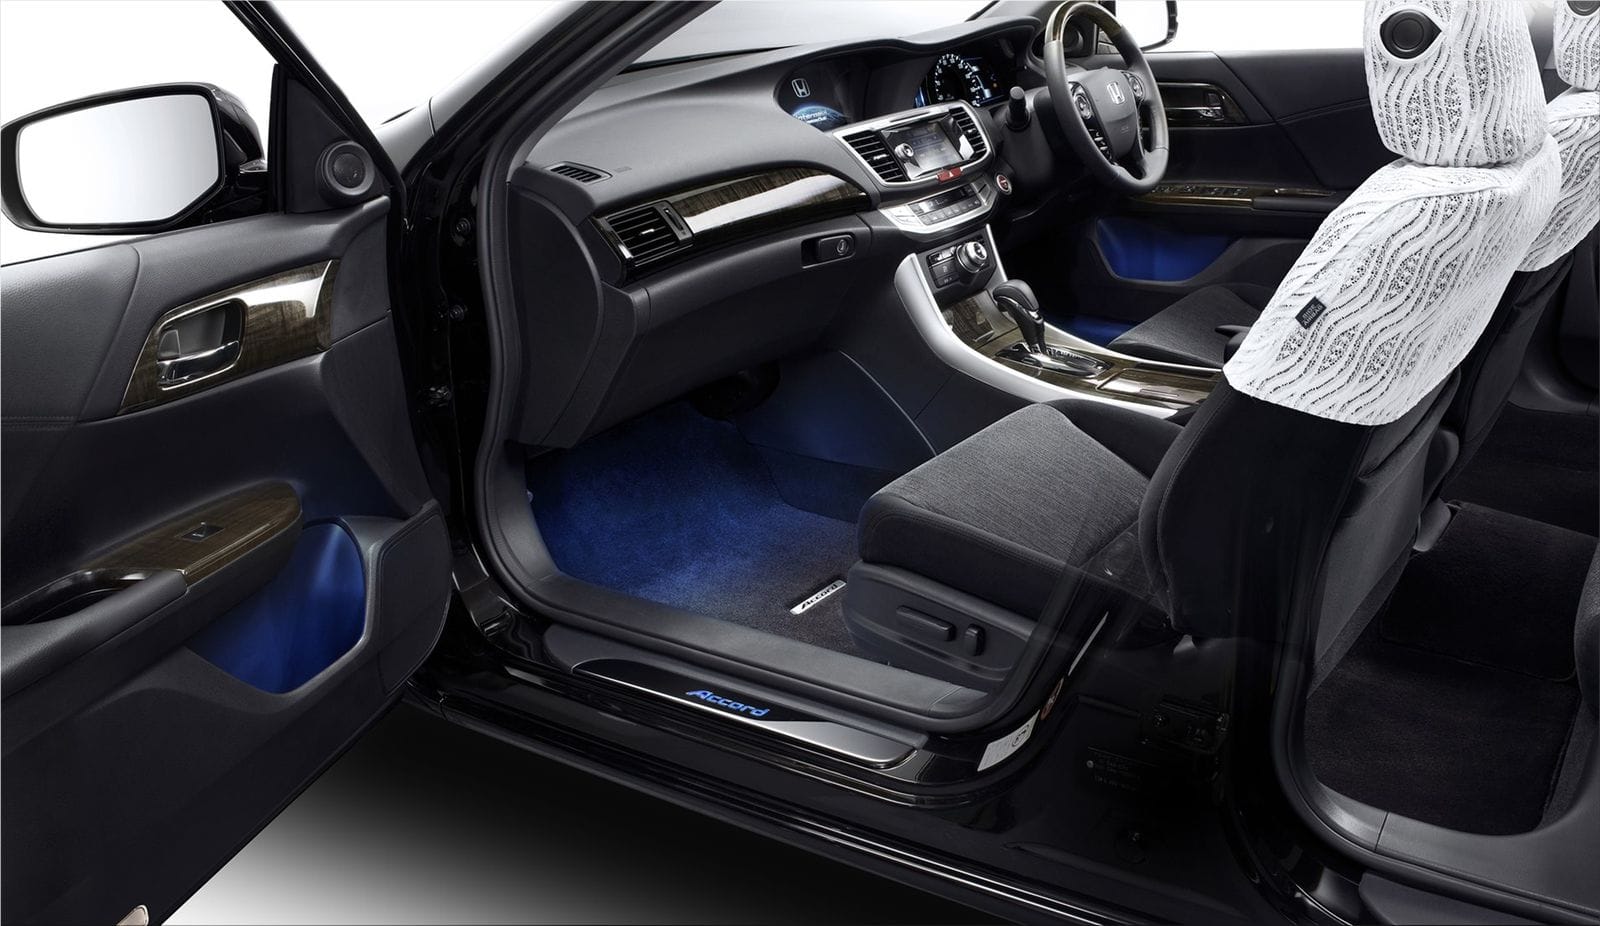 2014 Honda Accord Hybrid Ultra High Fuel Economy Honda Car